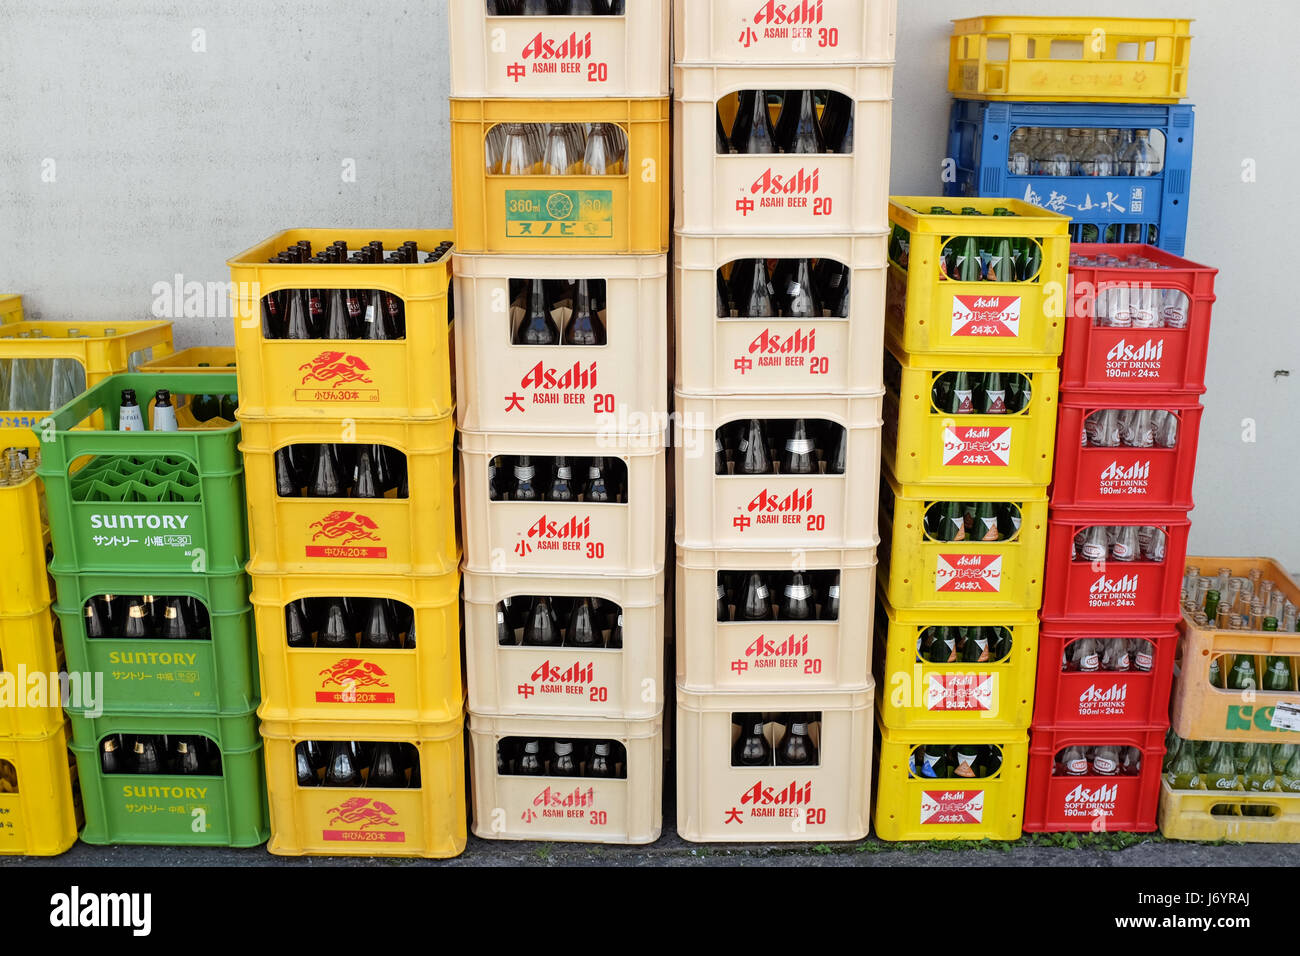 https://c8.alamy.com/comp/J6YRAJ/beer-crates-in-japan-J6YRAJ.jpg